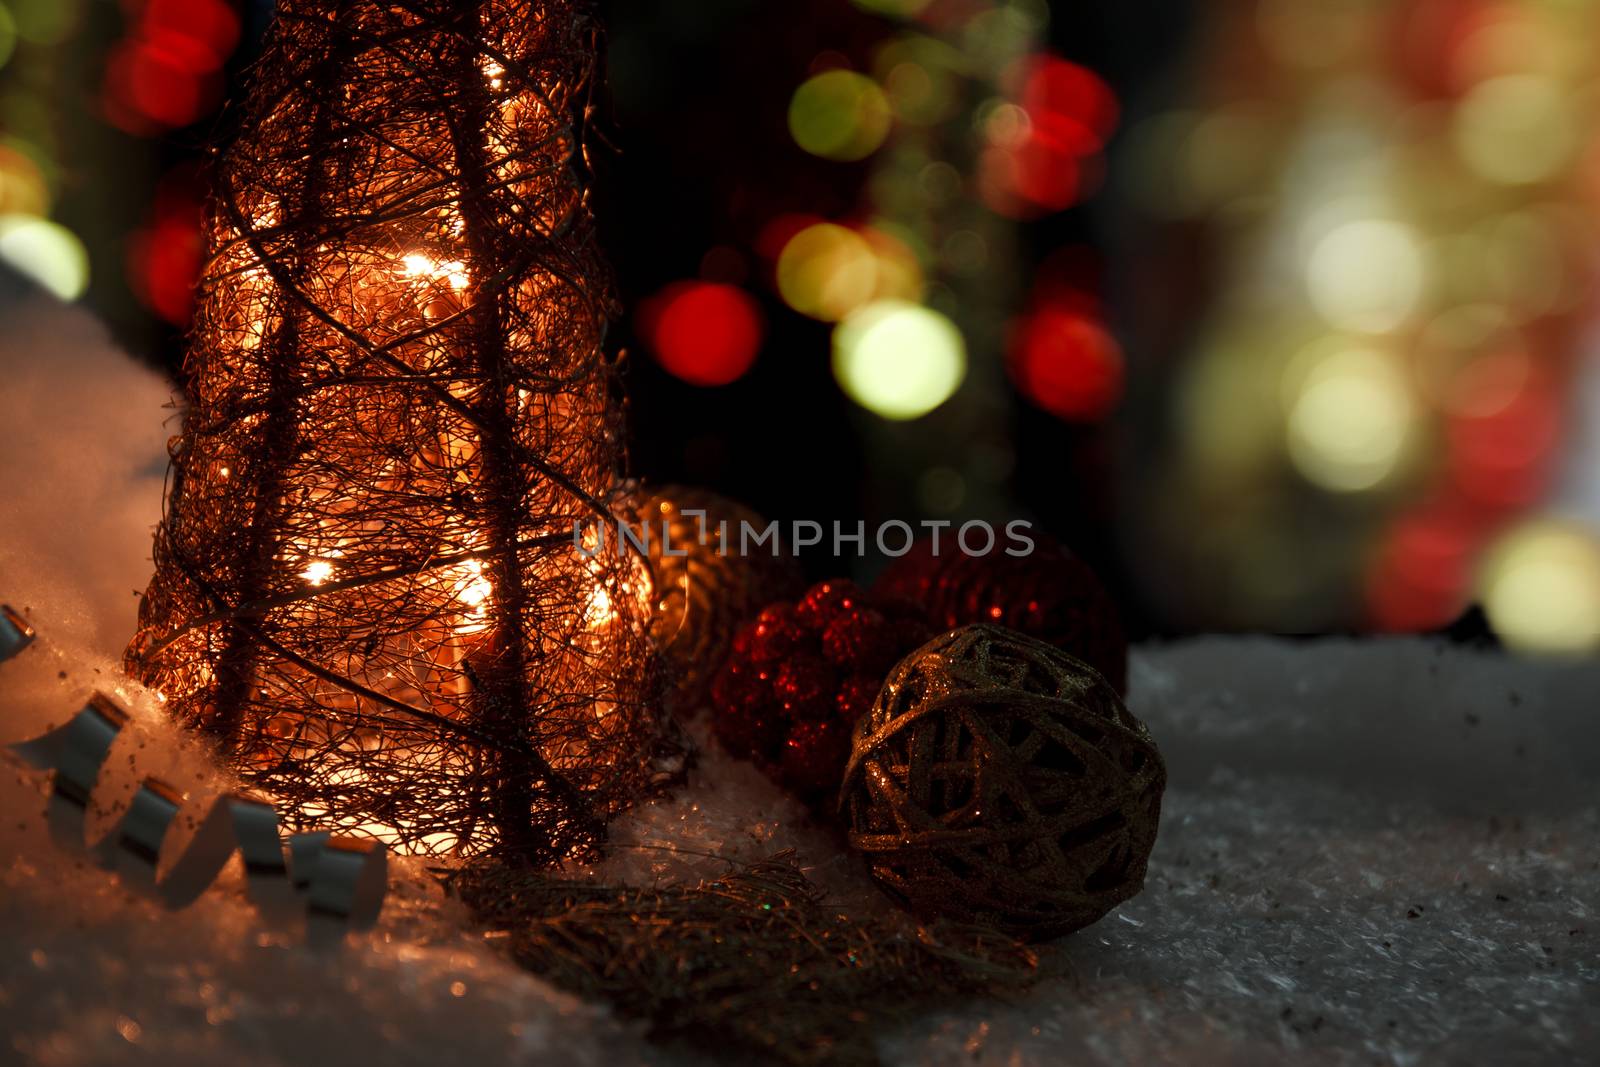 Christmas scenics by Nemida